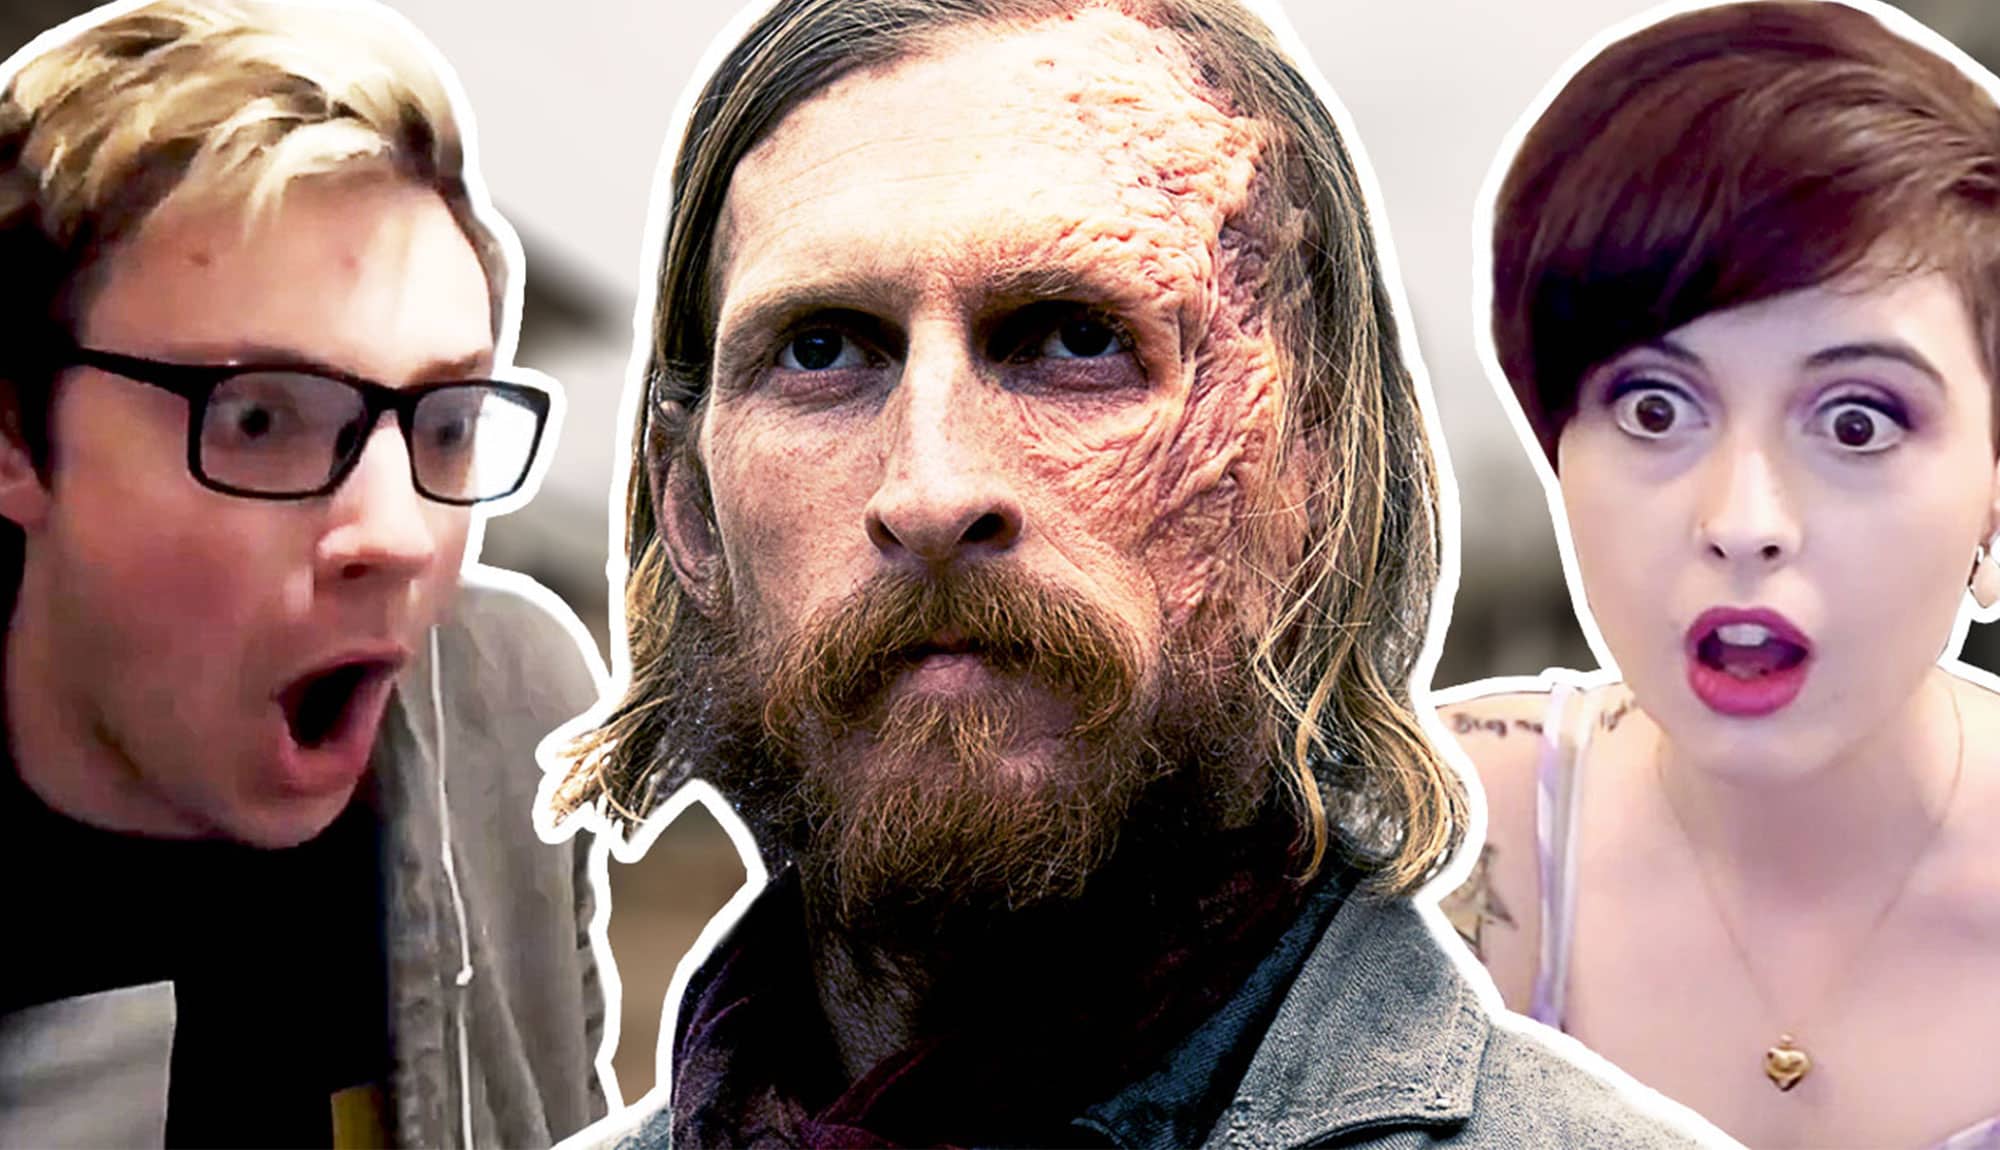 Fans React to Fear the Walking Dead Season 5 Episode 3: “Humbug’s Gulch”